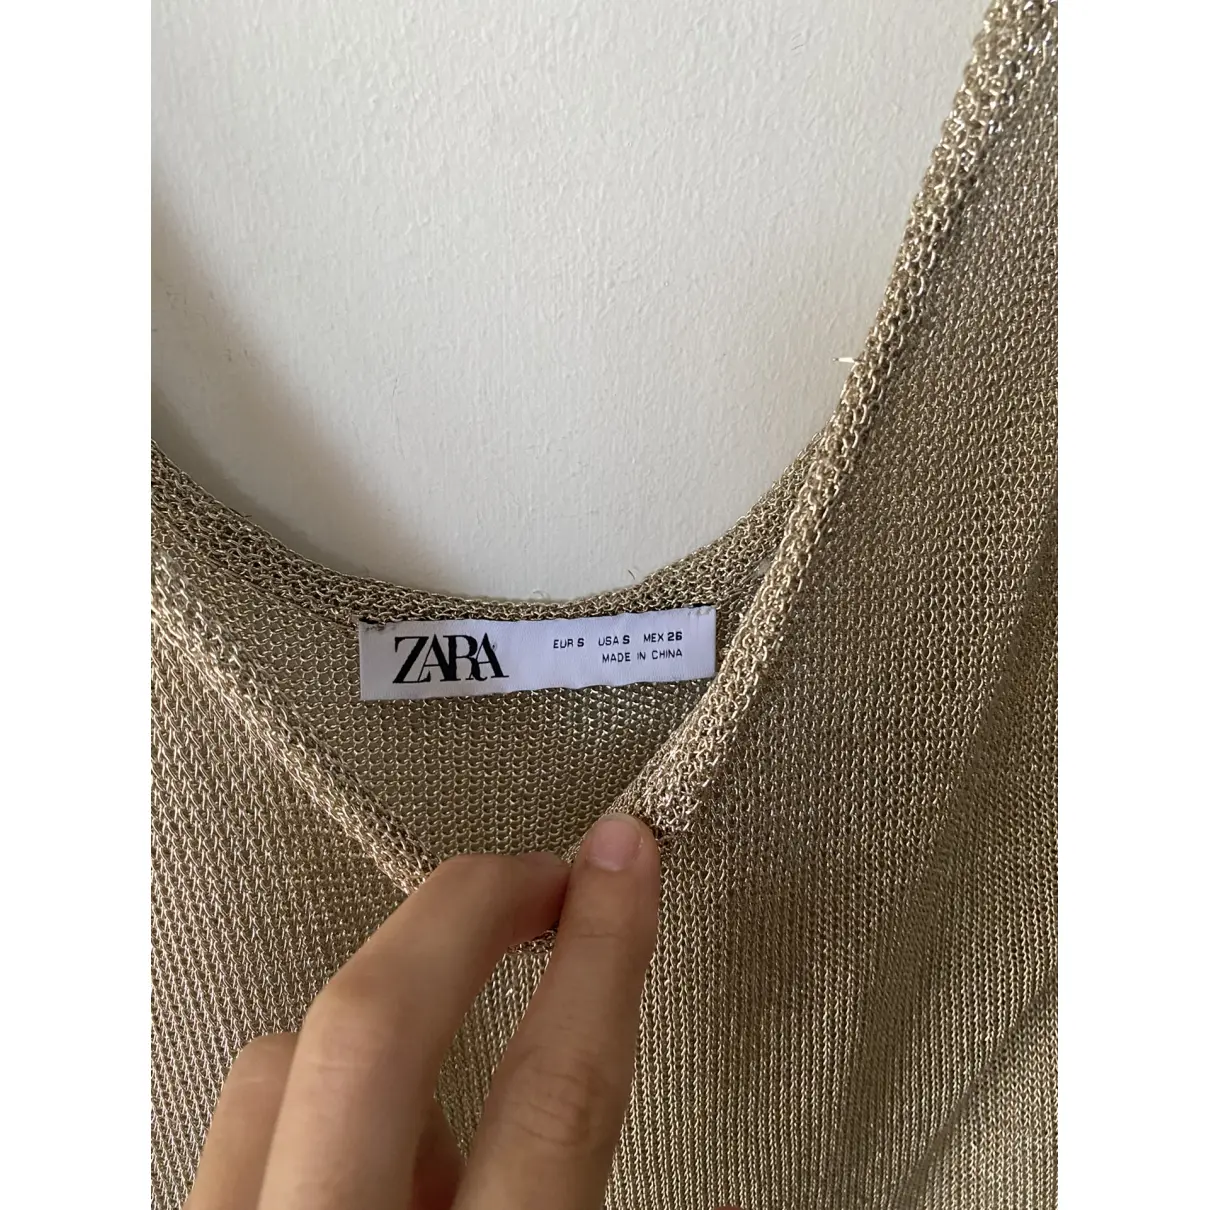 Buy Zara Mid-length dress online